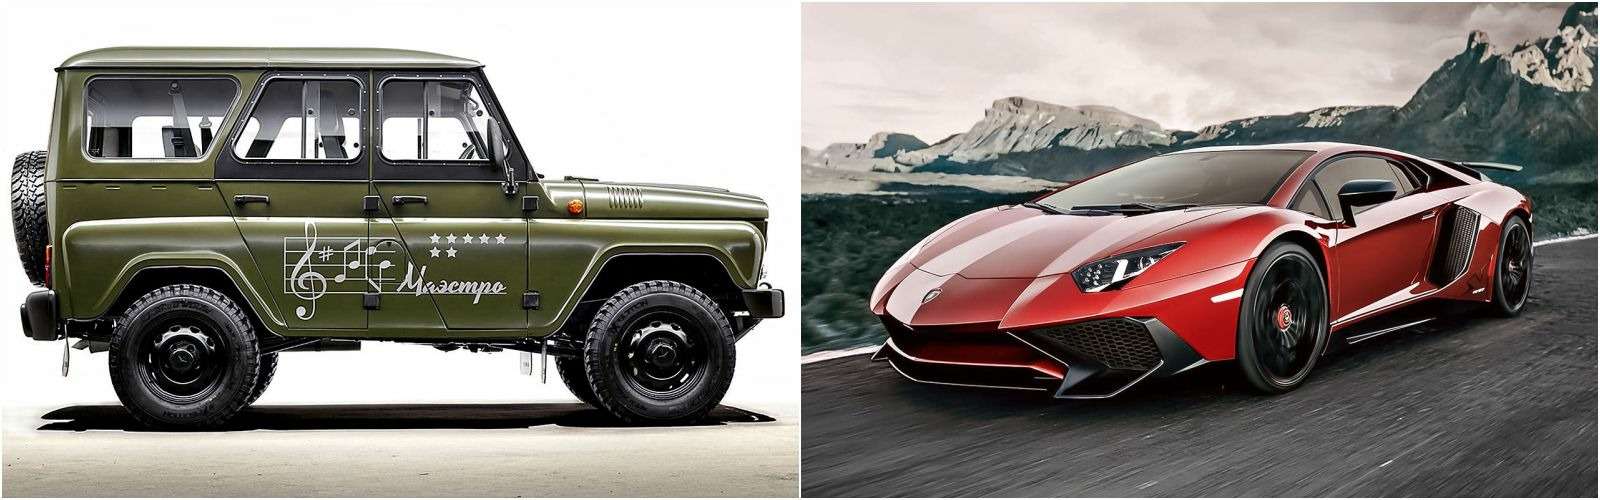 УАЗ Хантер и Lamborghini Aventador